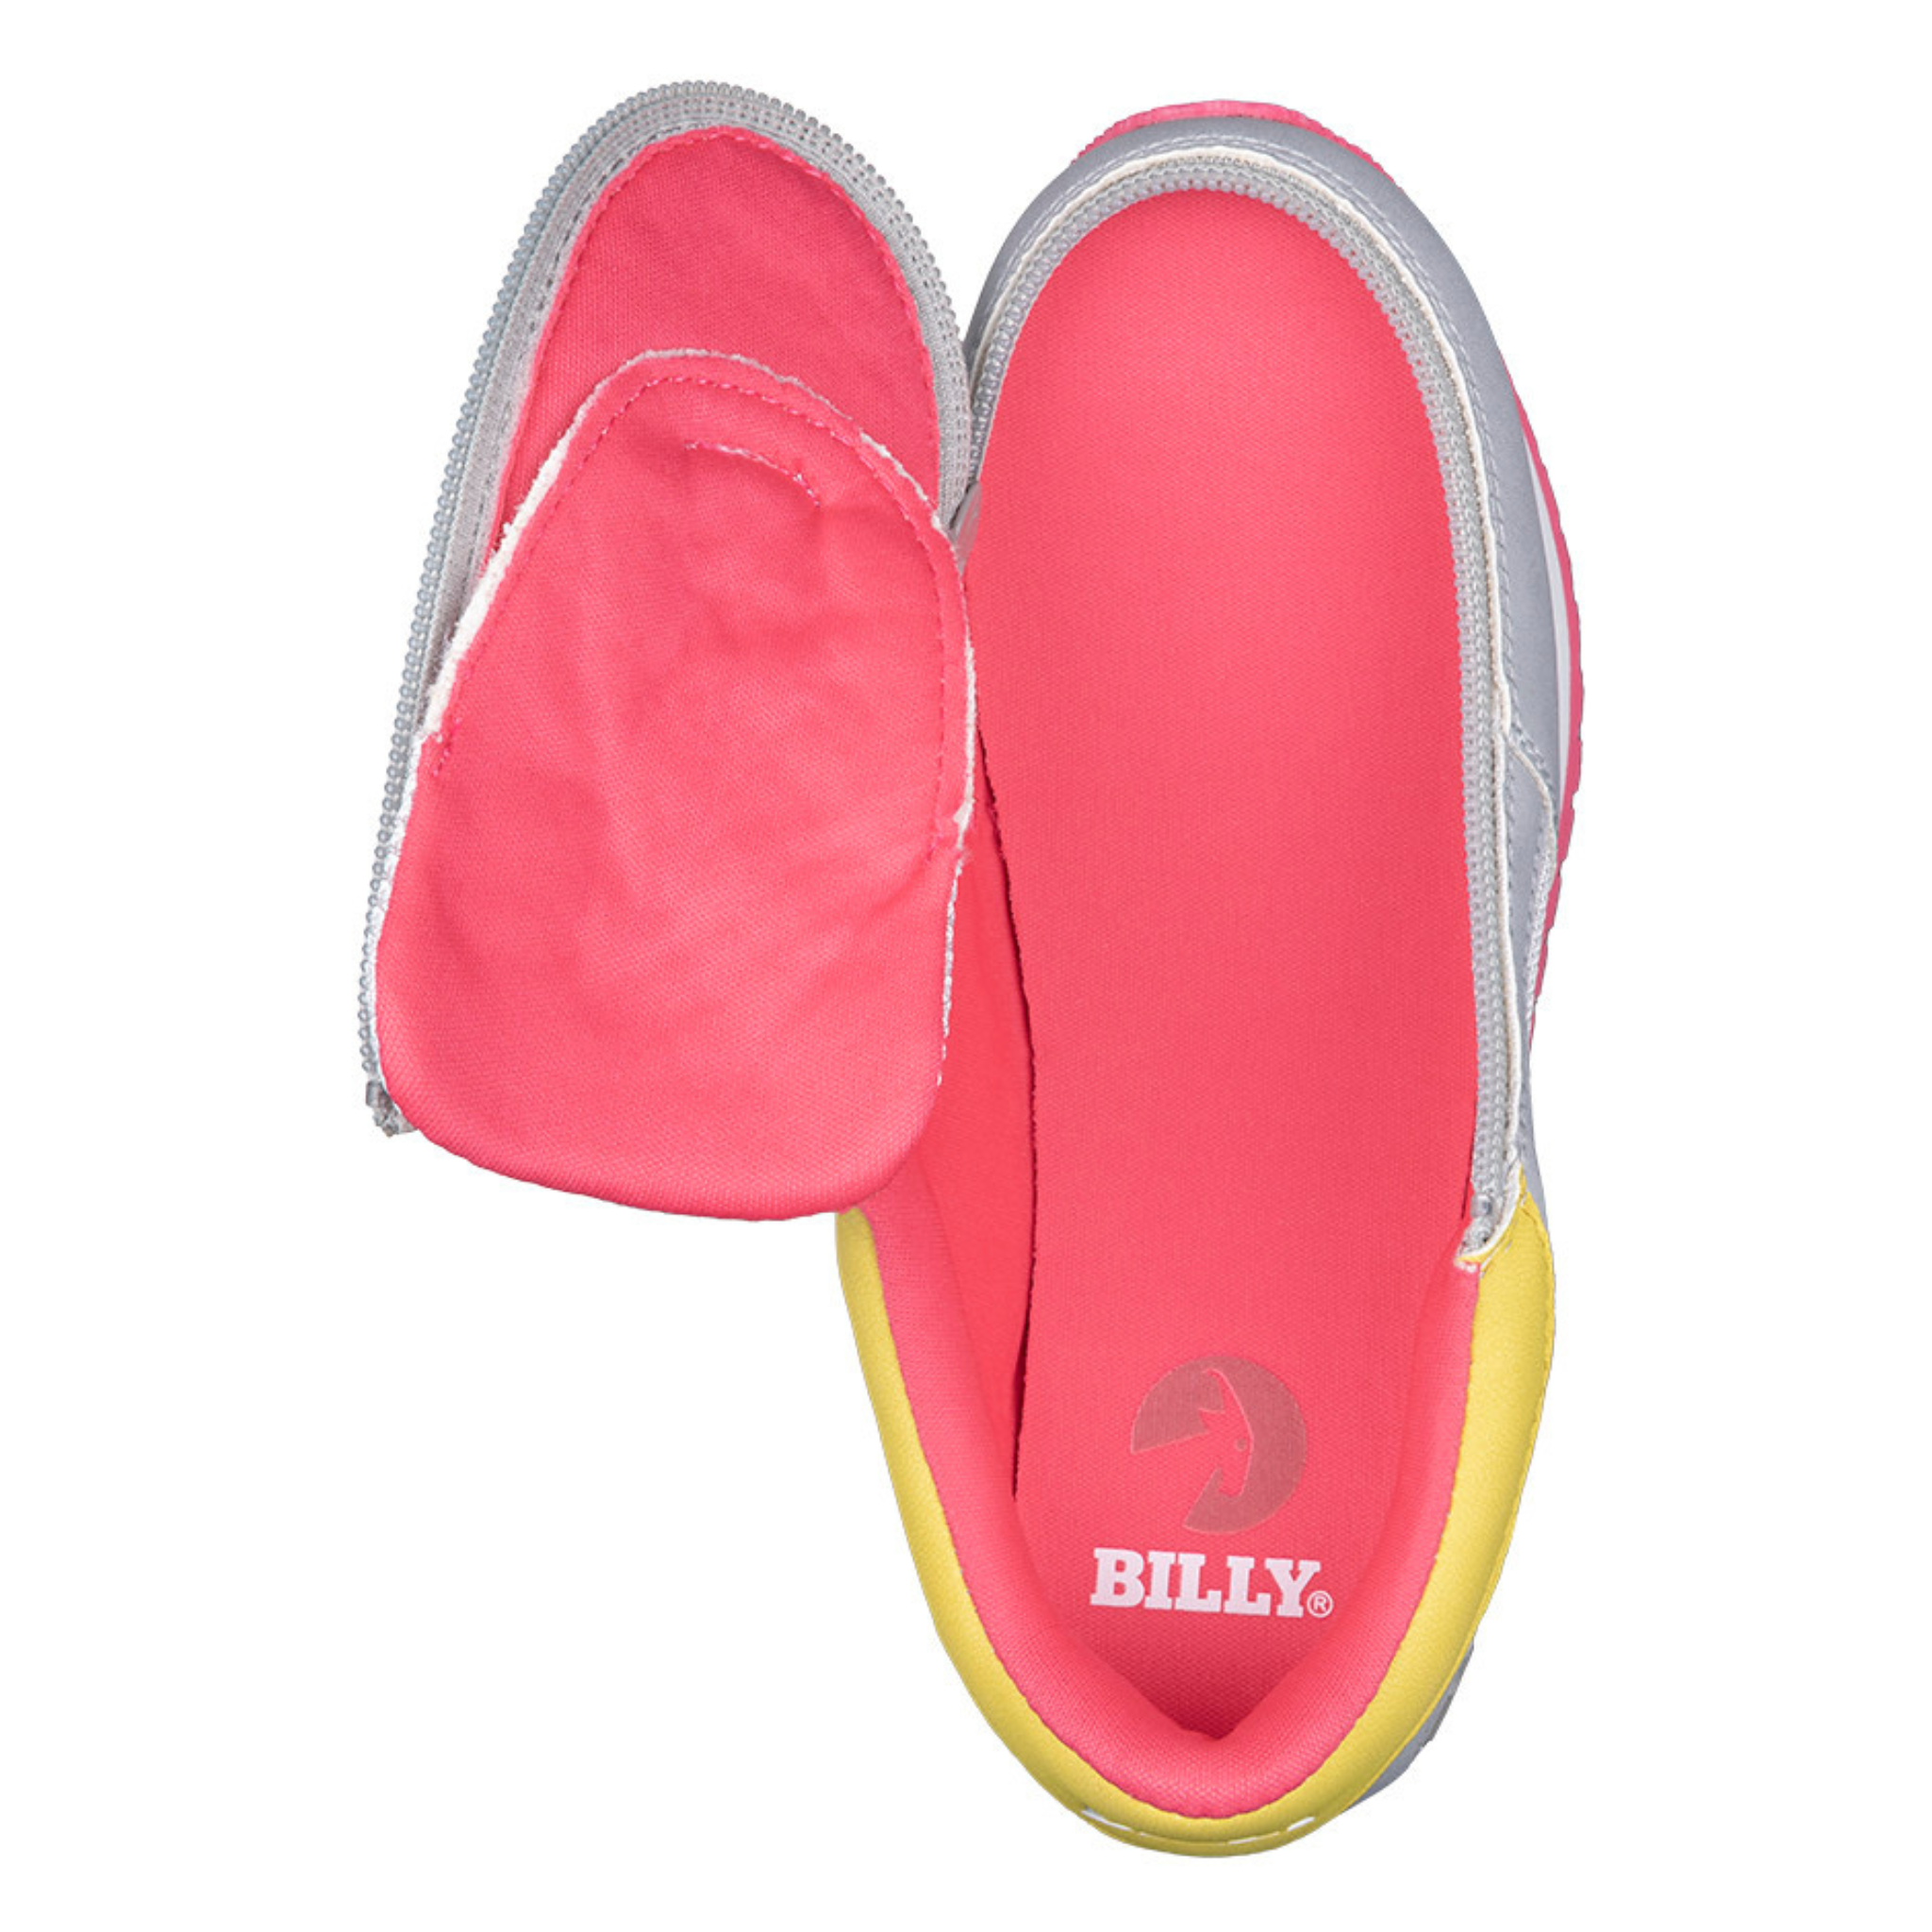 Billy Footwear (Kids) - Grey/ Pink Faux Suede Trainers